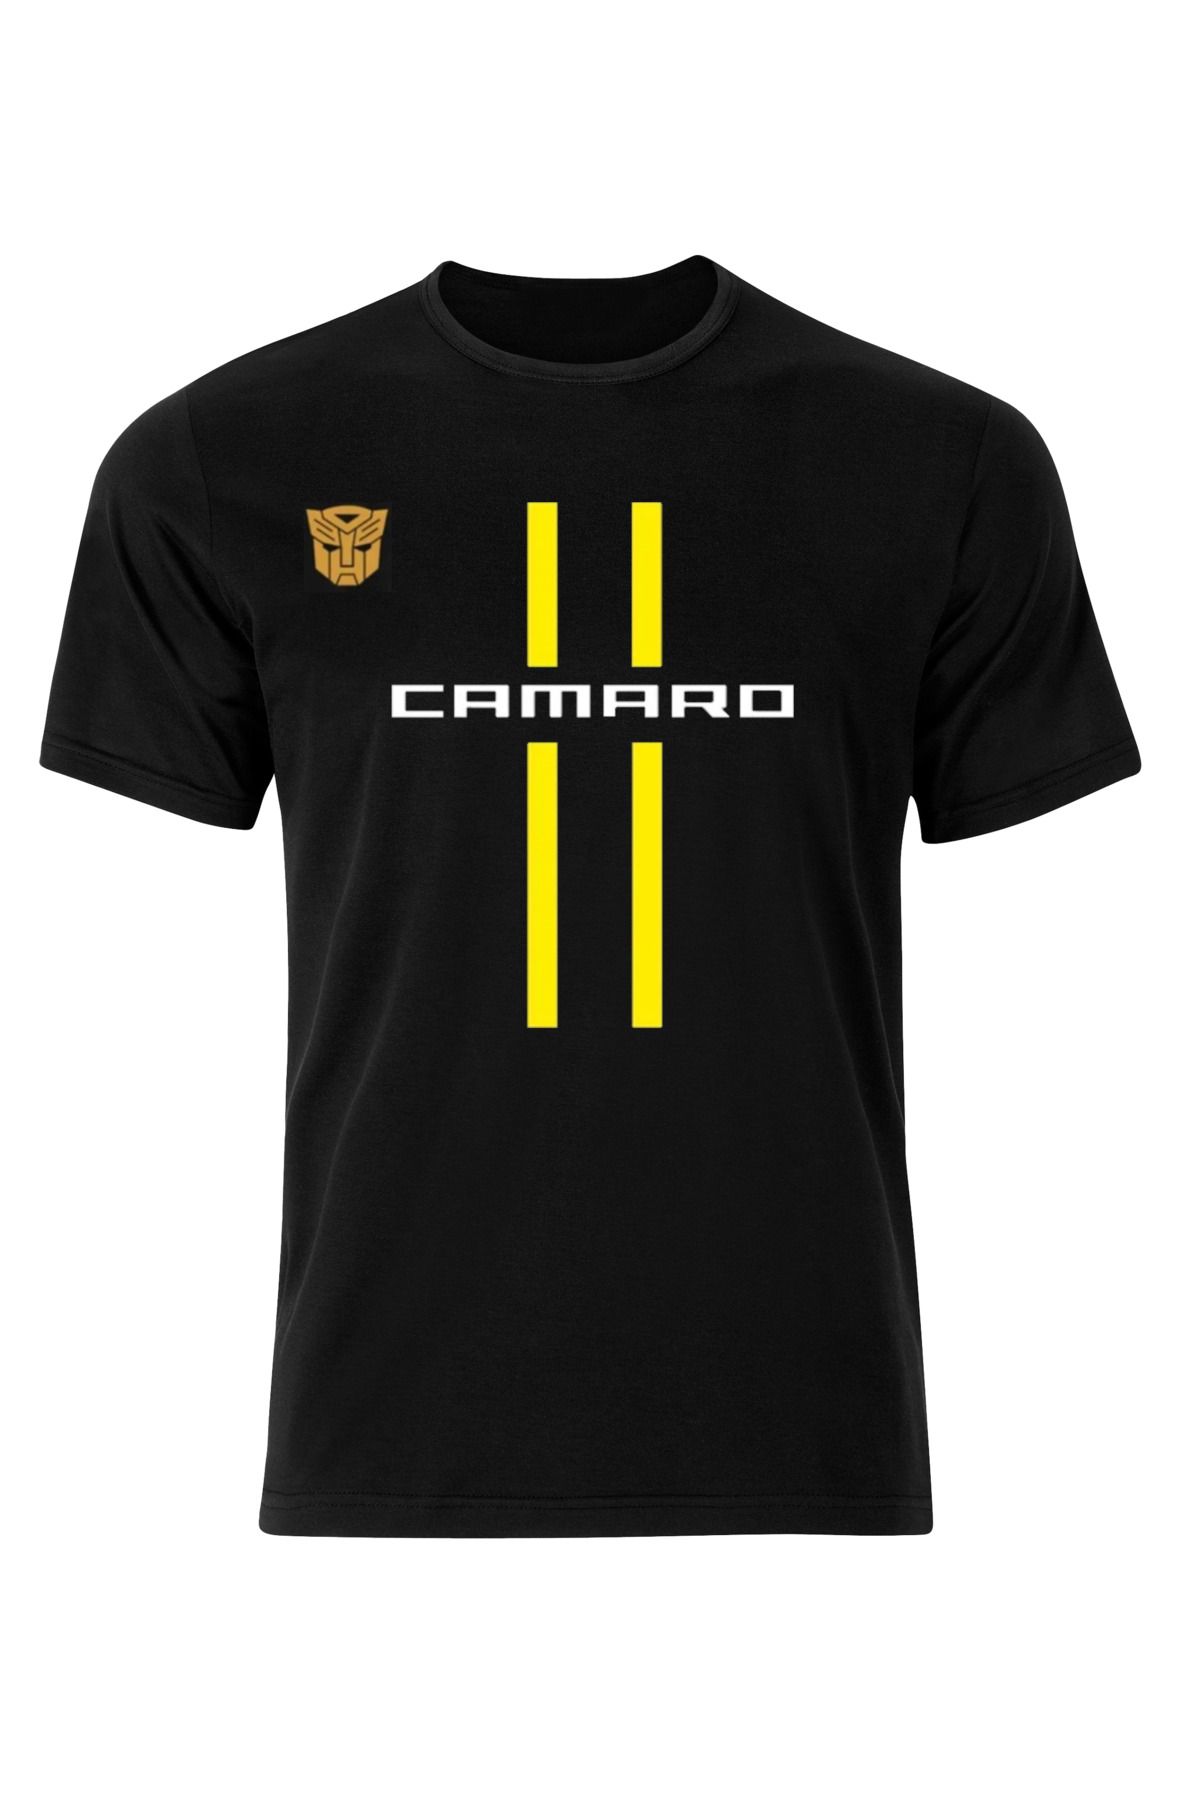 LEIVOR Transformers Camaro Bumblebee Baskılı Pamuk T-shirt